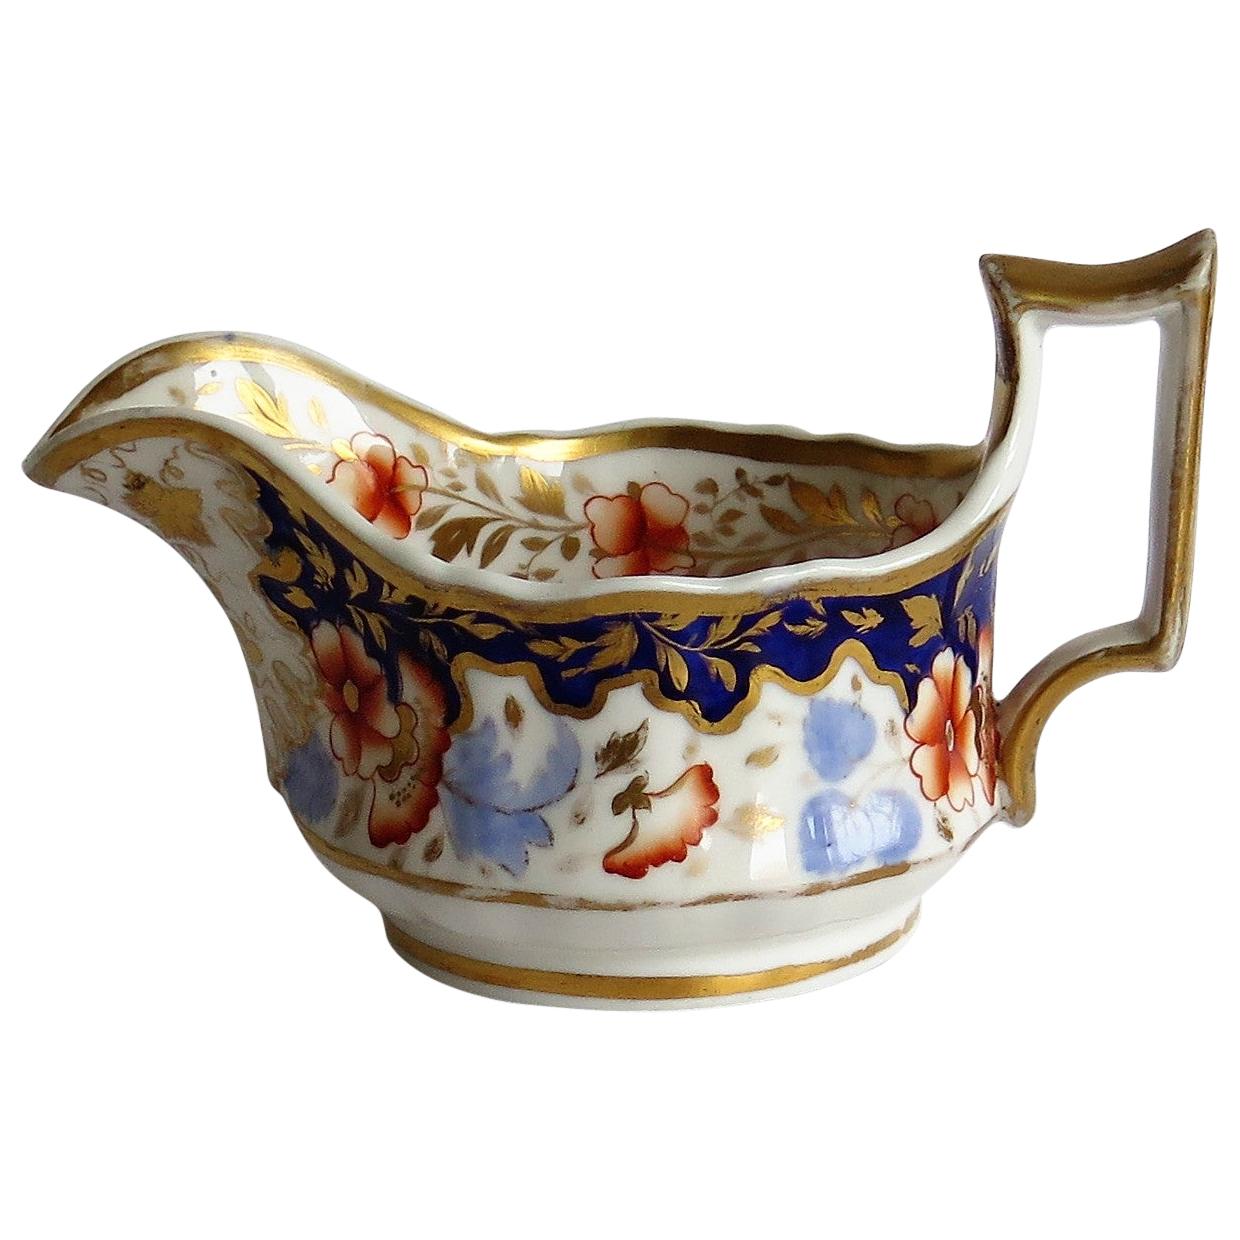 Ridgway Porcelain Milk Jug or Creamer Pattern 2/1005, Regency Period, circa 1825